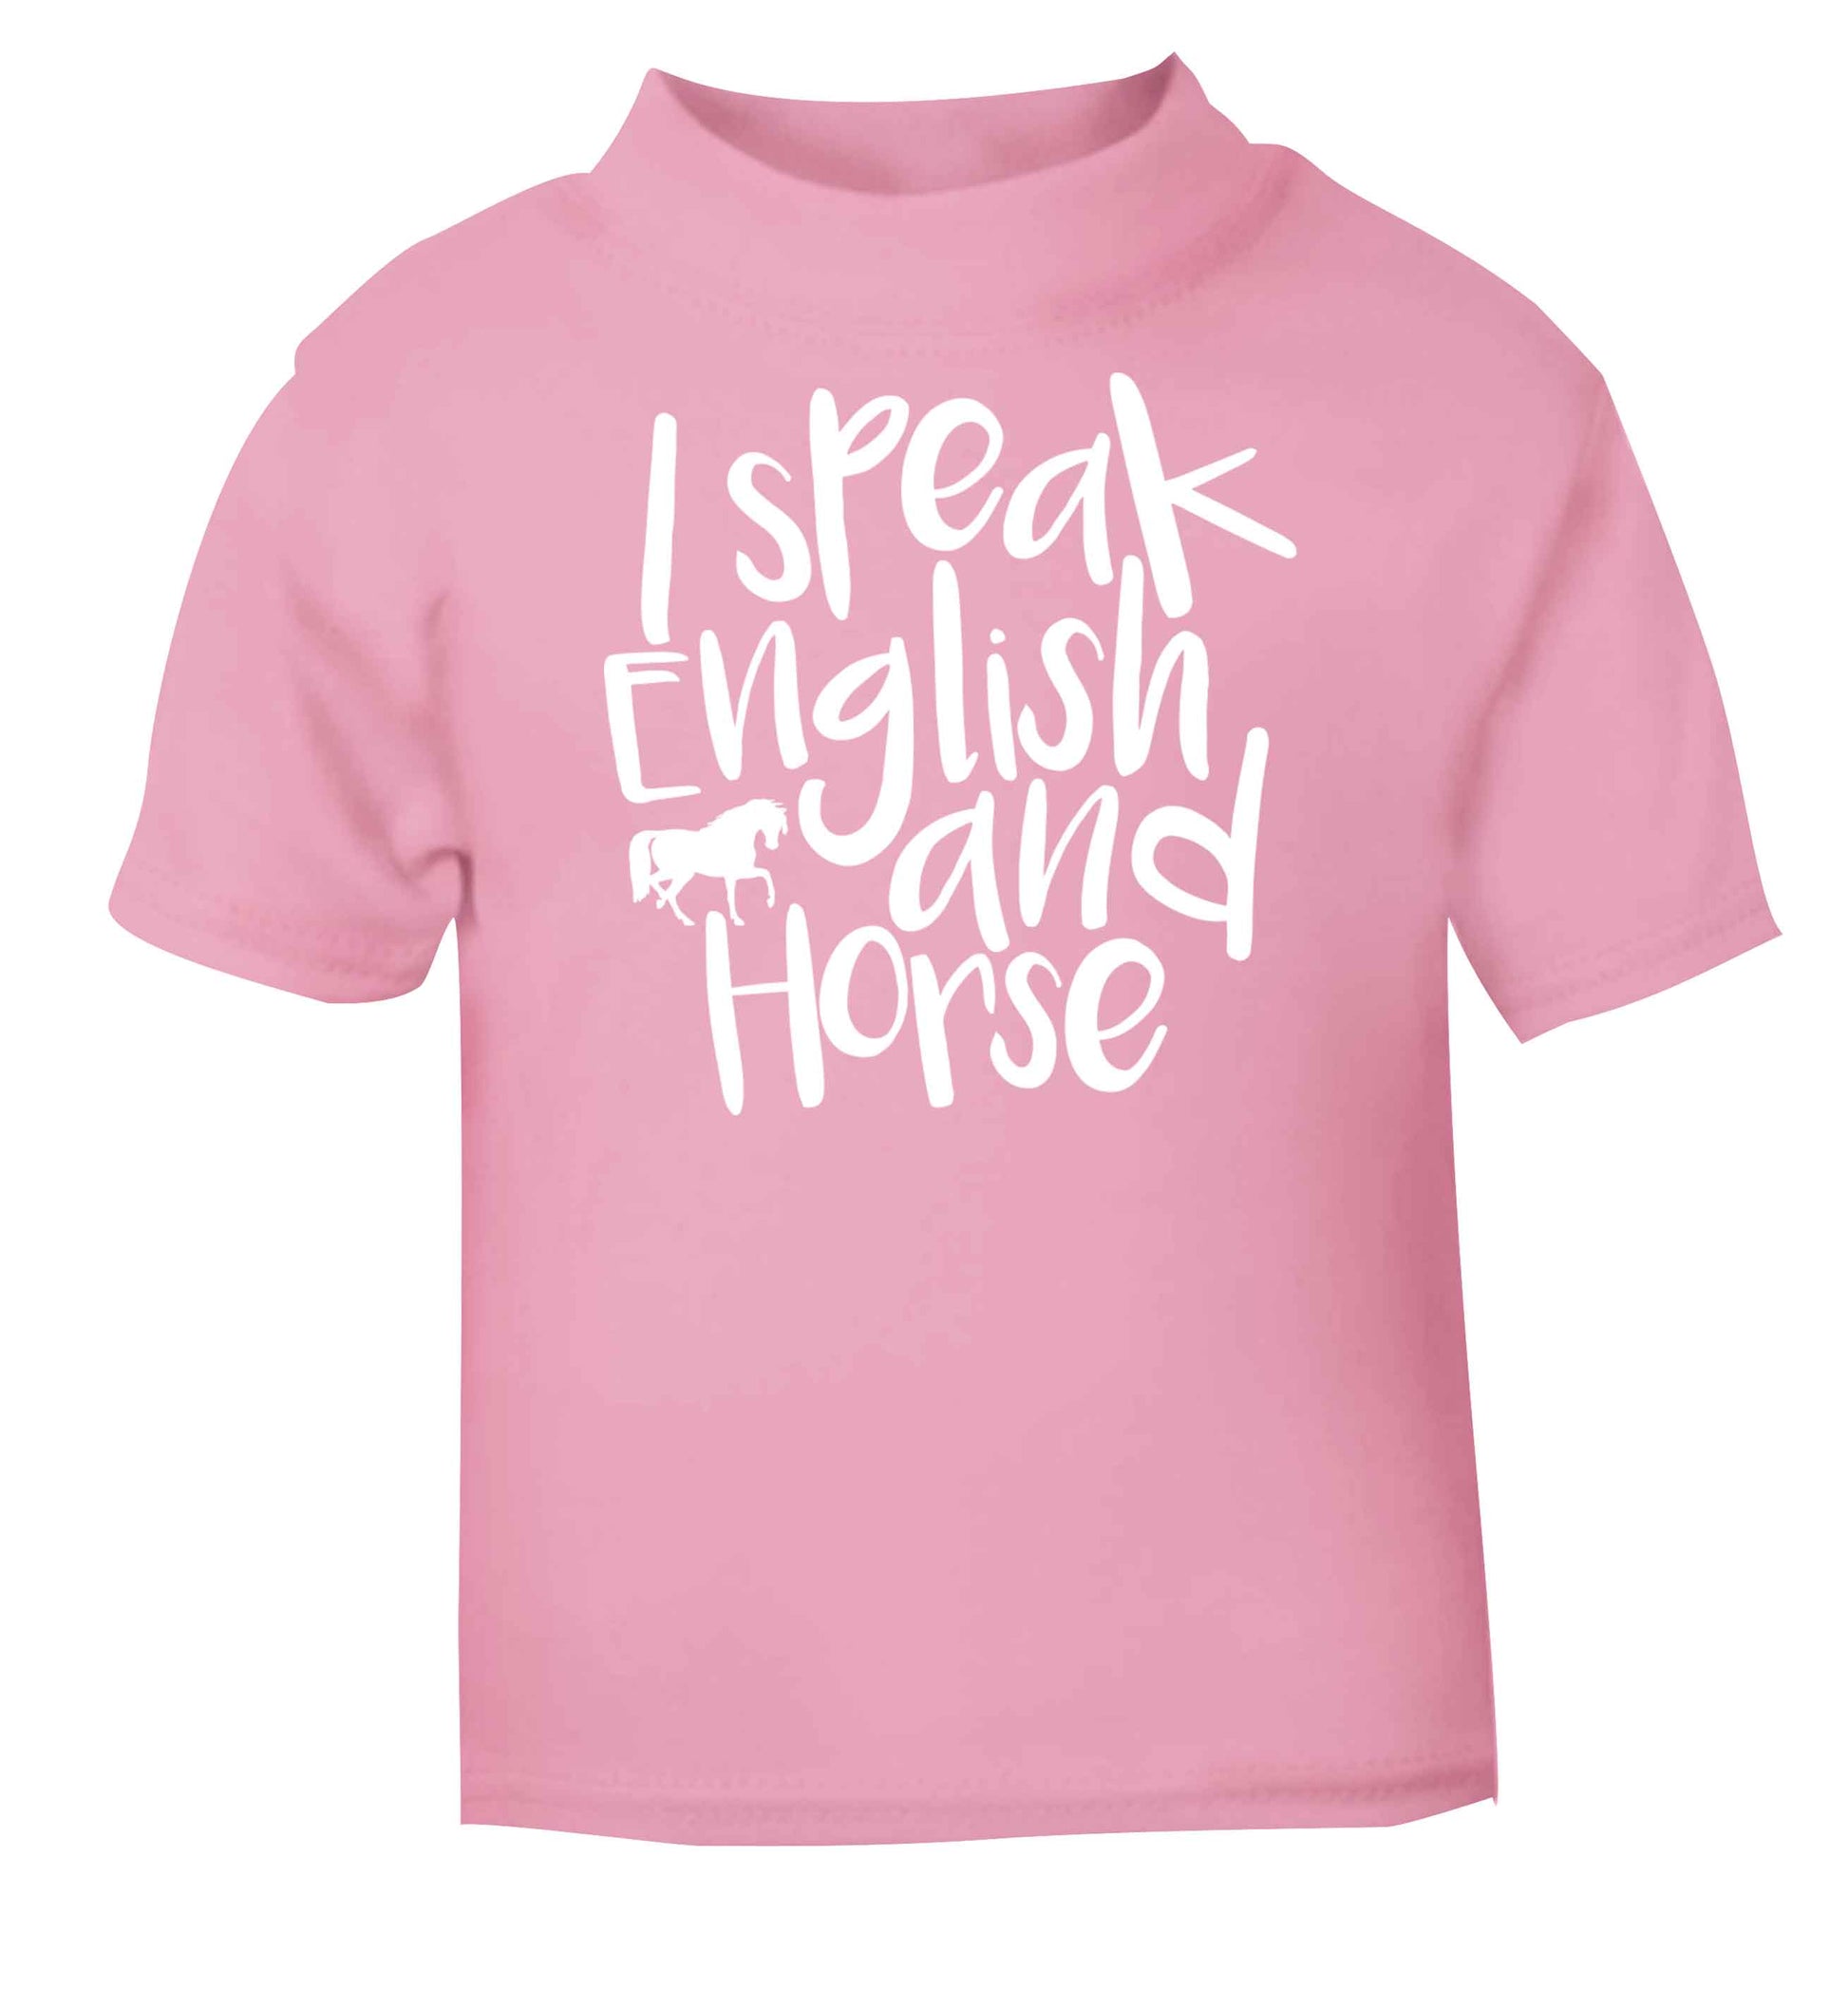 I speak English and horse light pink baby toddler Tshirt 2 Years